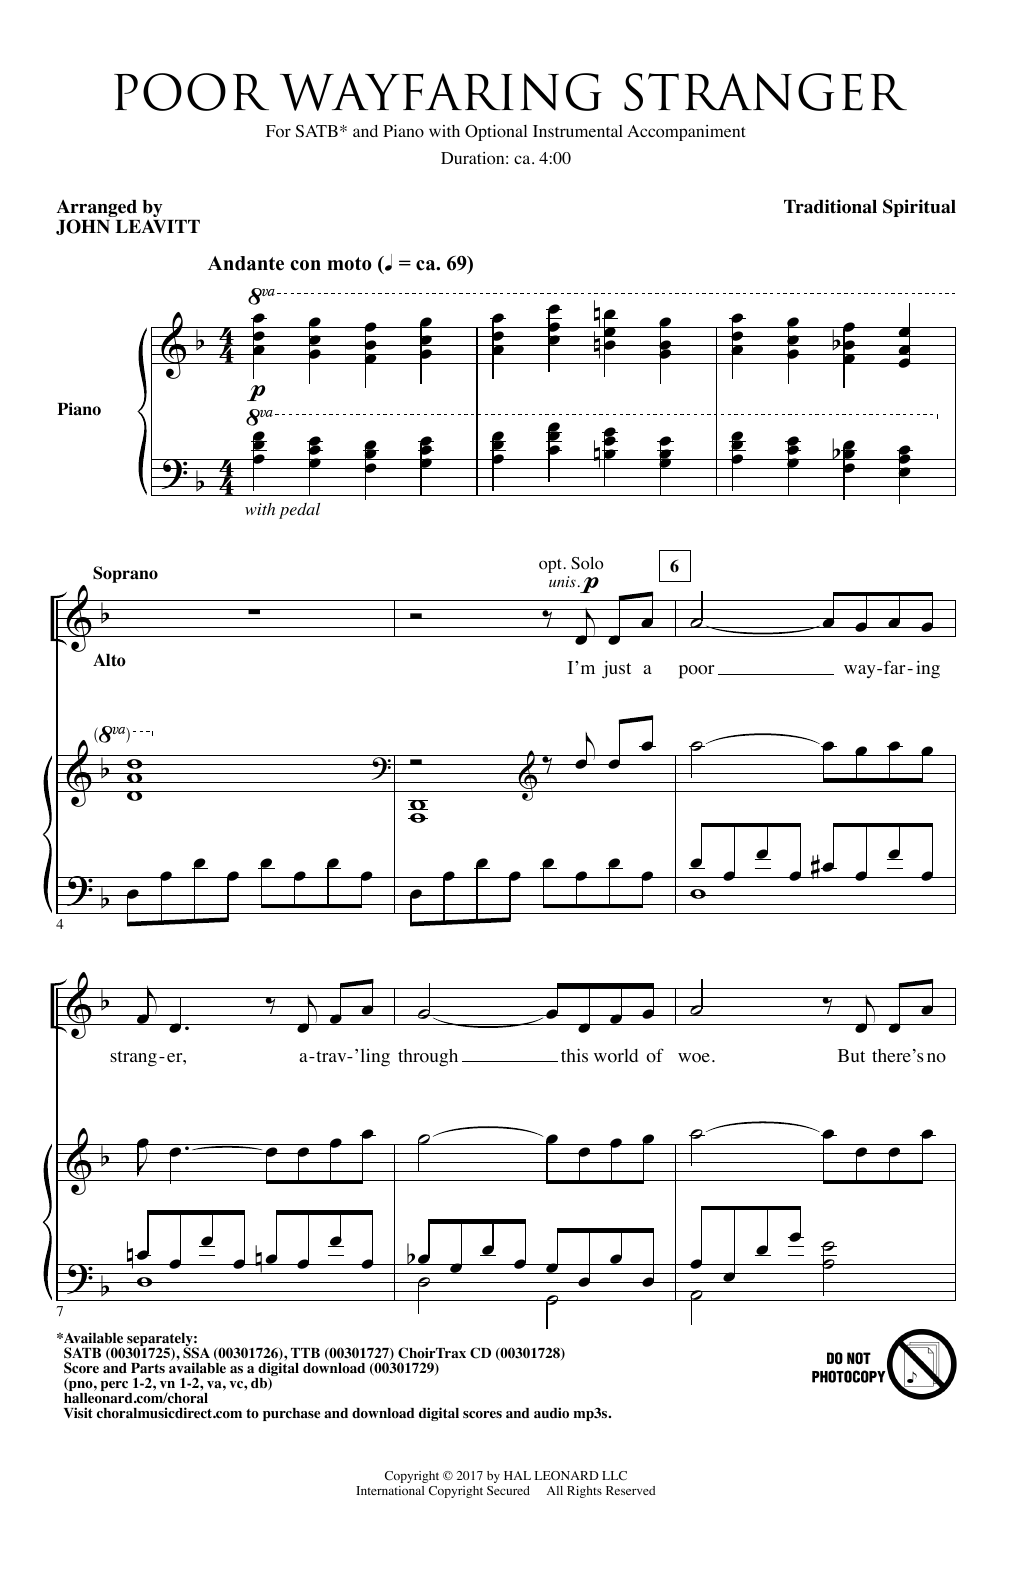 Download Traditional Spiritual Poor Wayfaring Stranger (arr. John Leavitt) Sheet Music and learn how to play SSA Choir PDF digital score in minutes